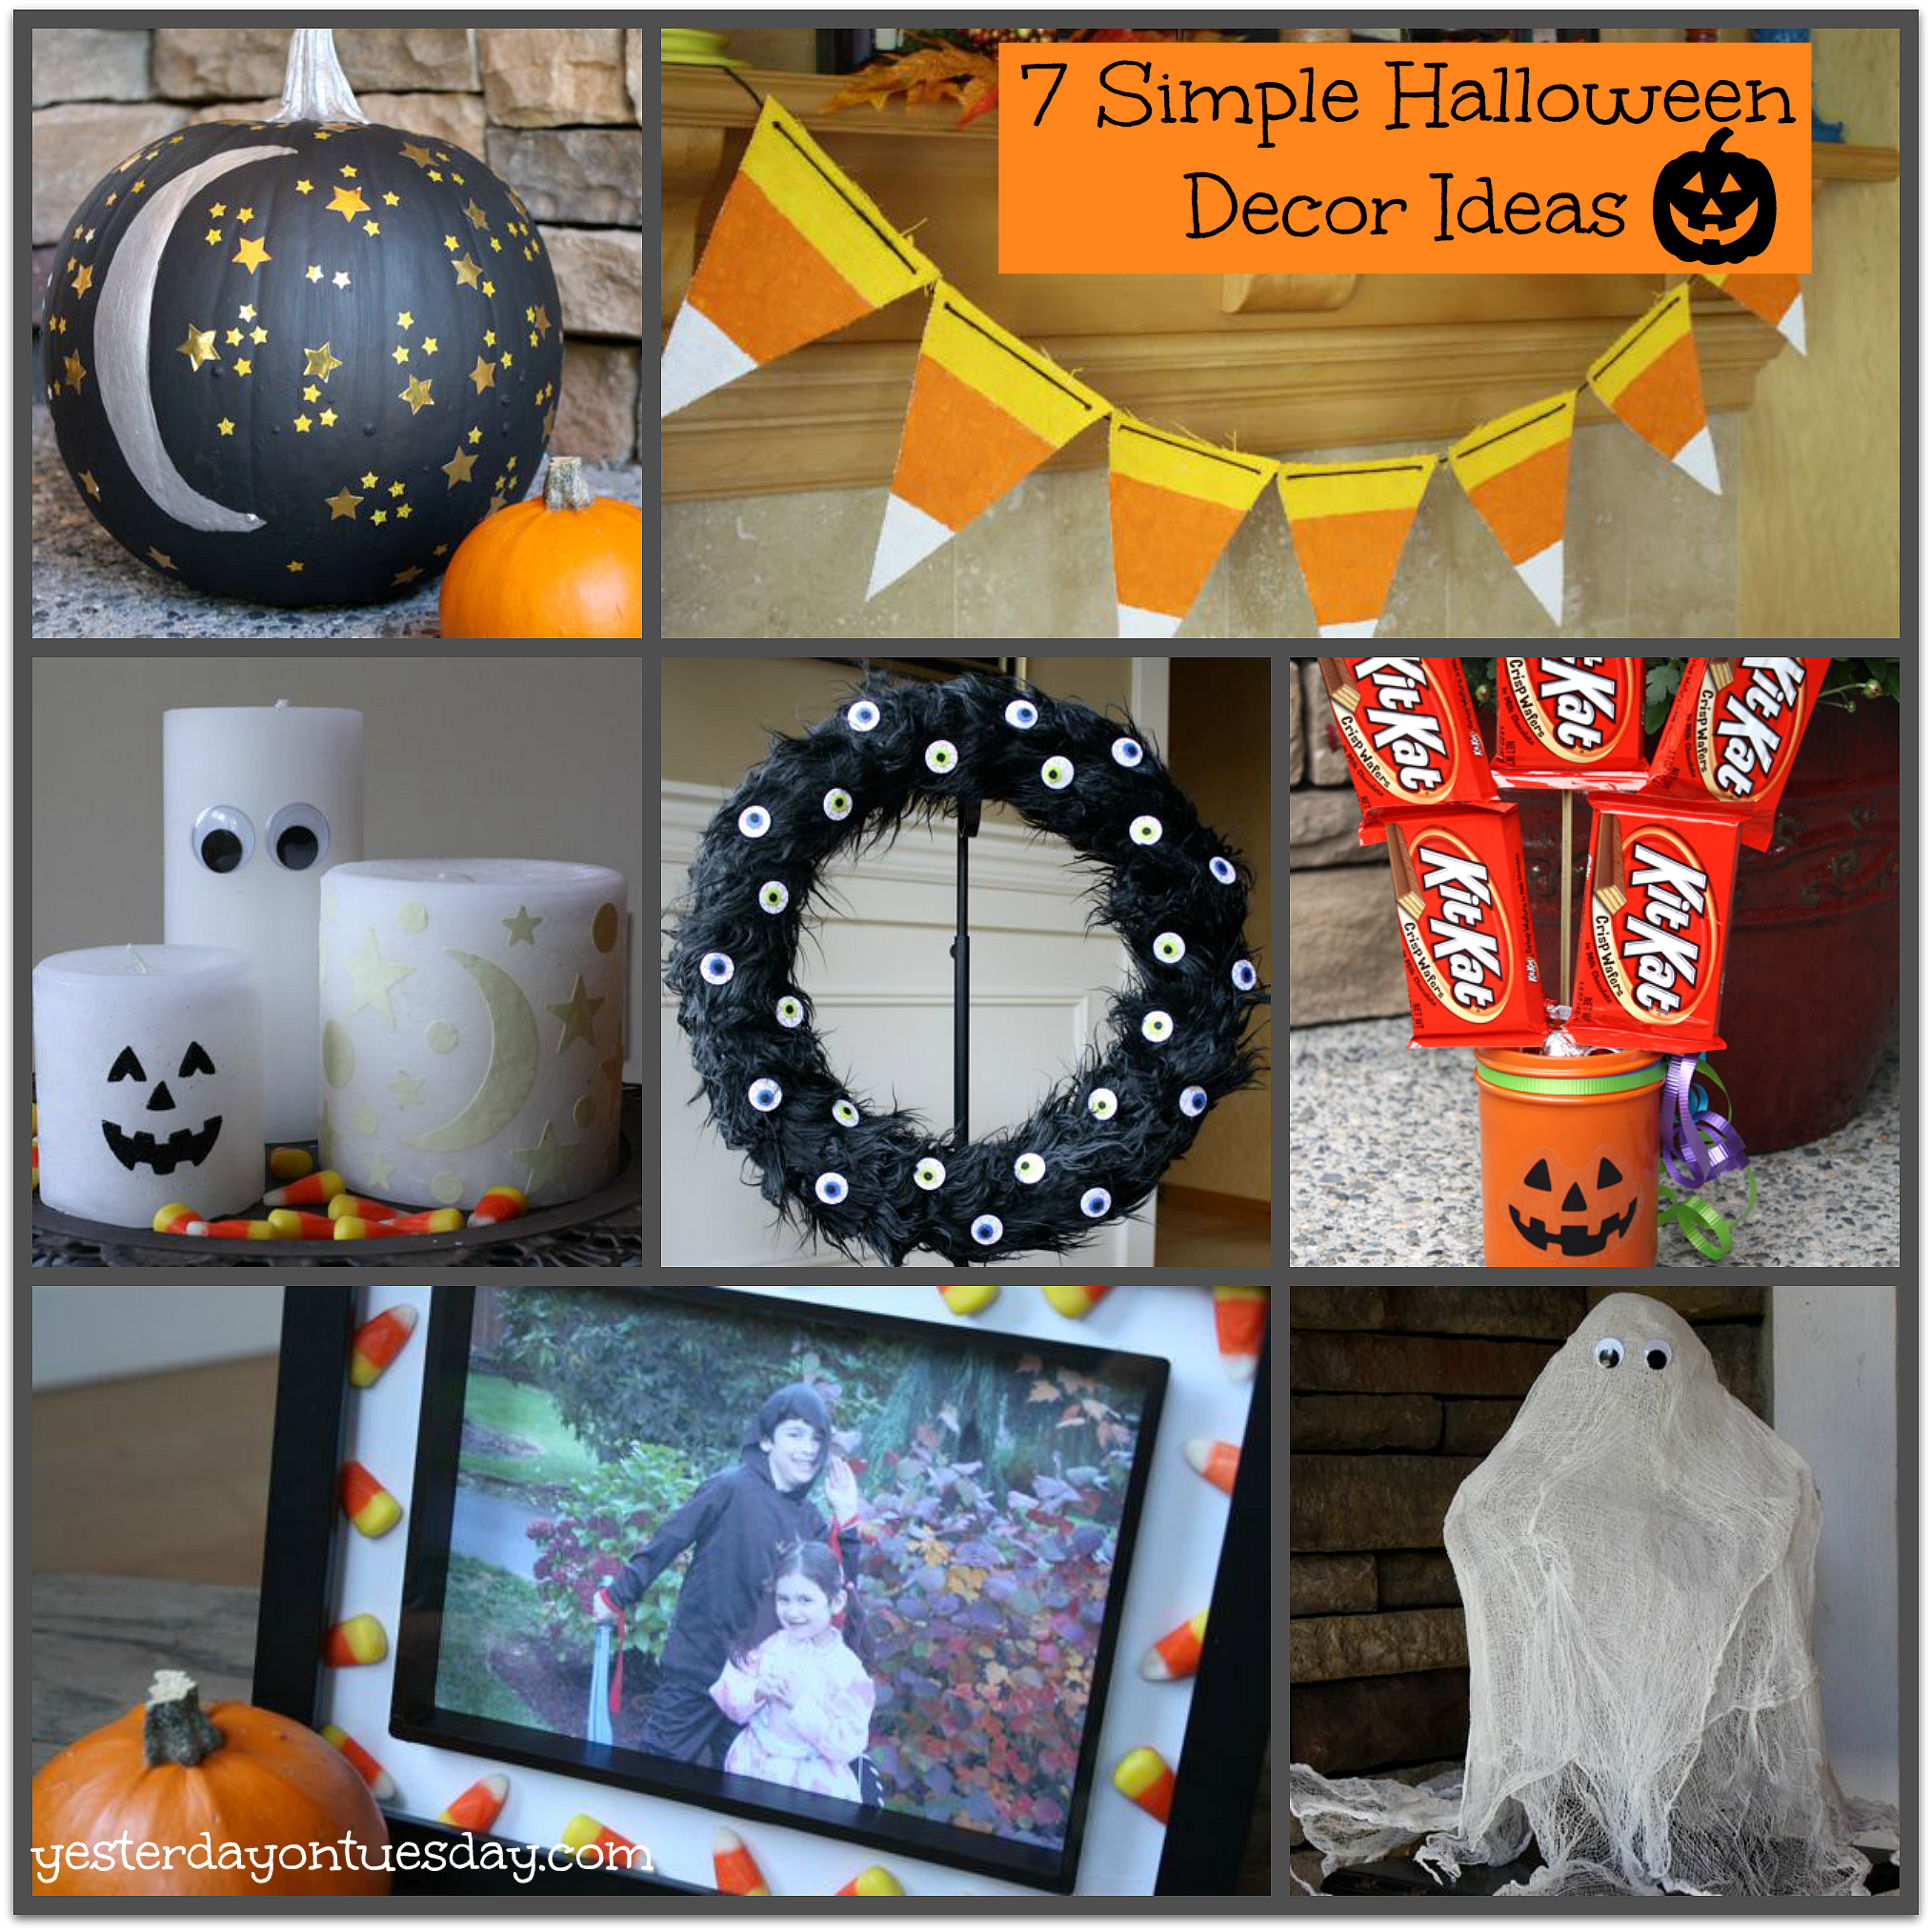 7 Simple Halloween Decor Ideas